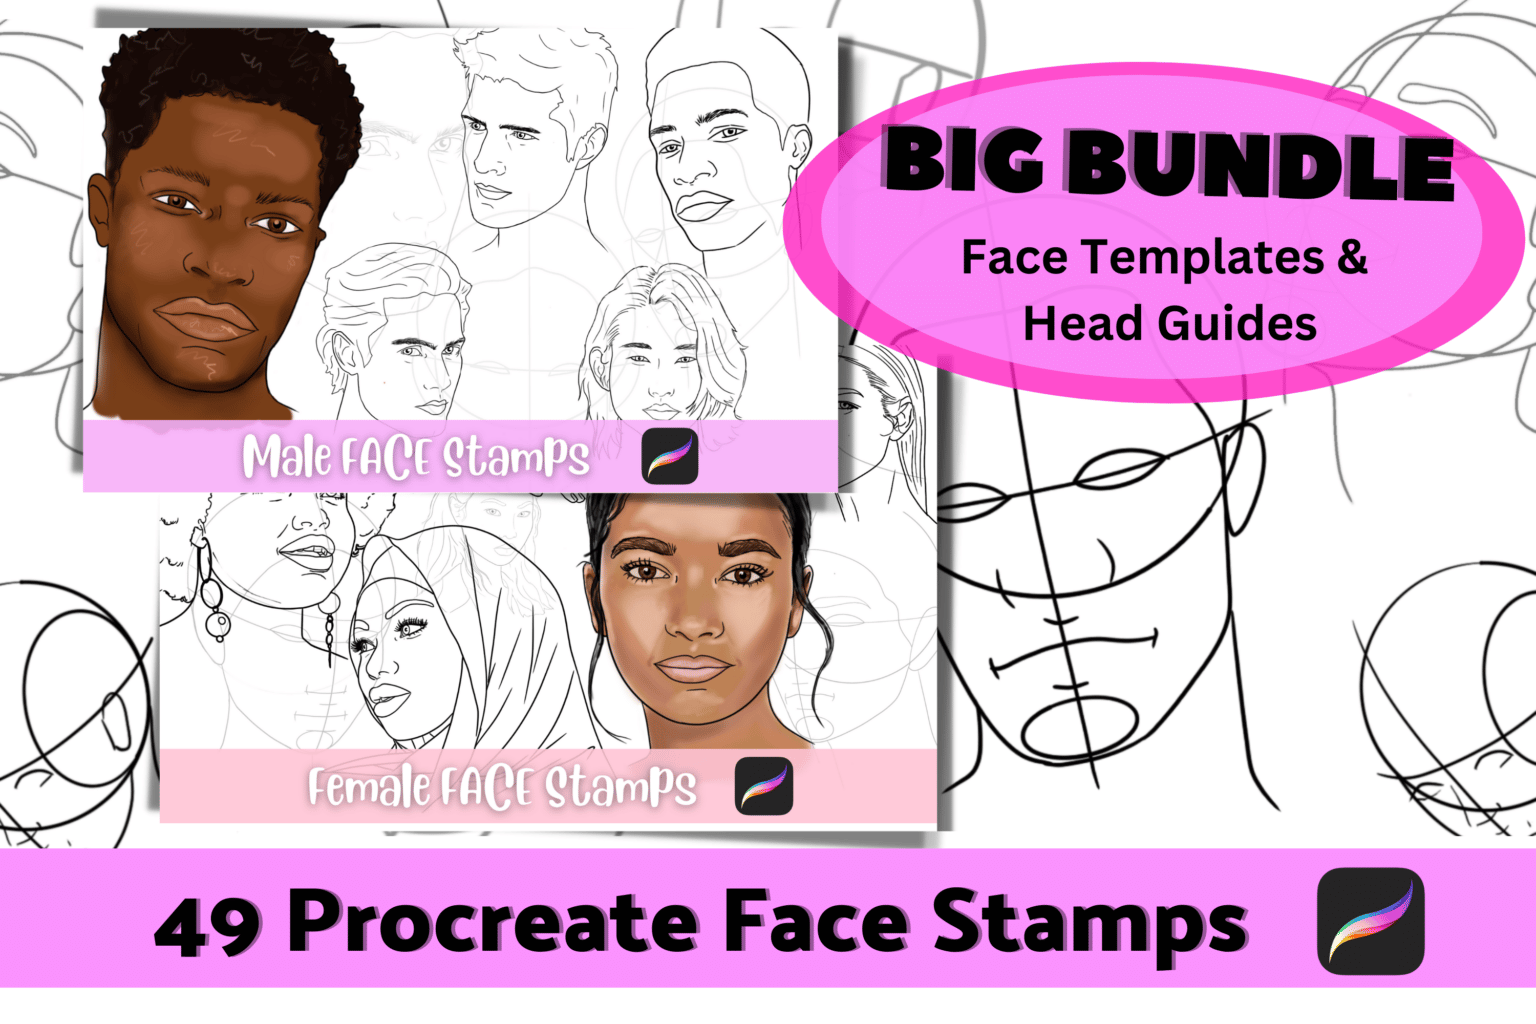 27 Procreate Face Templates The Ultimate Resource for Digital Portrait